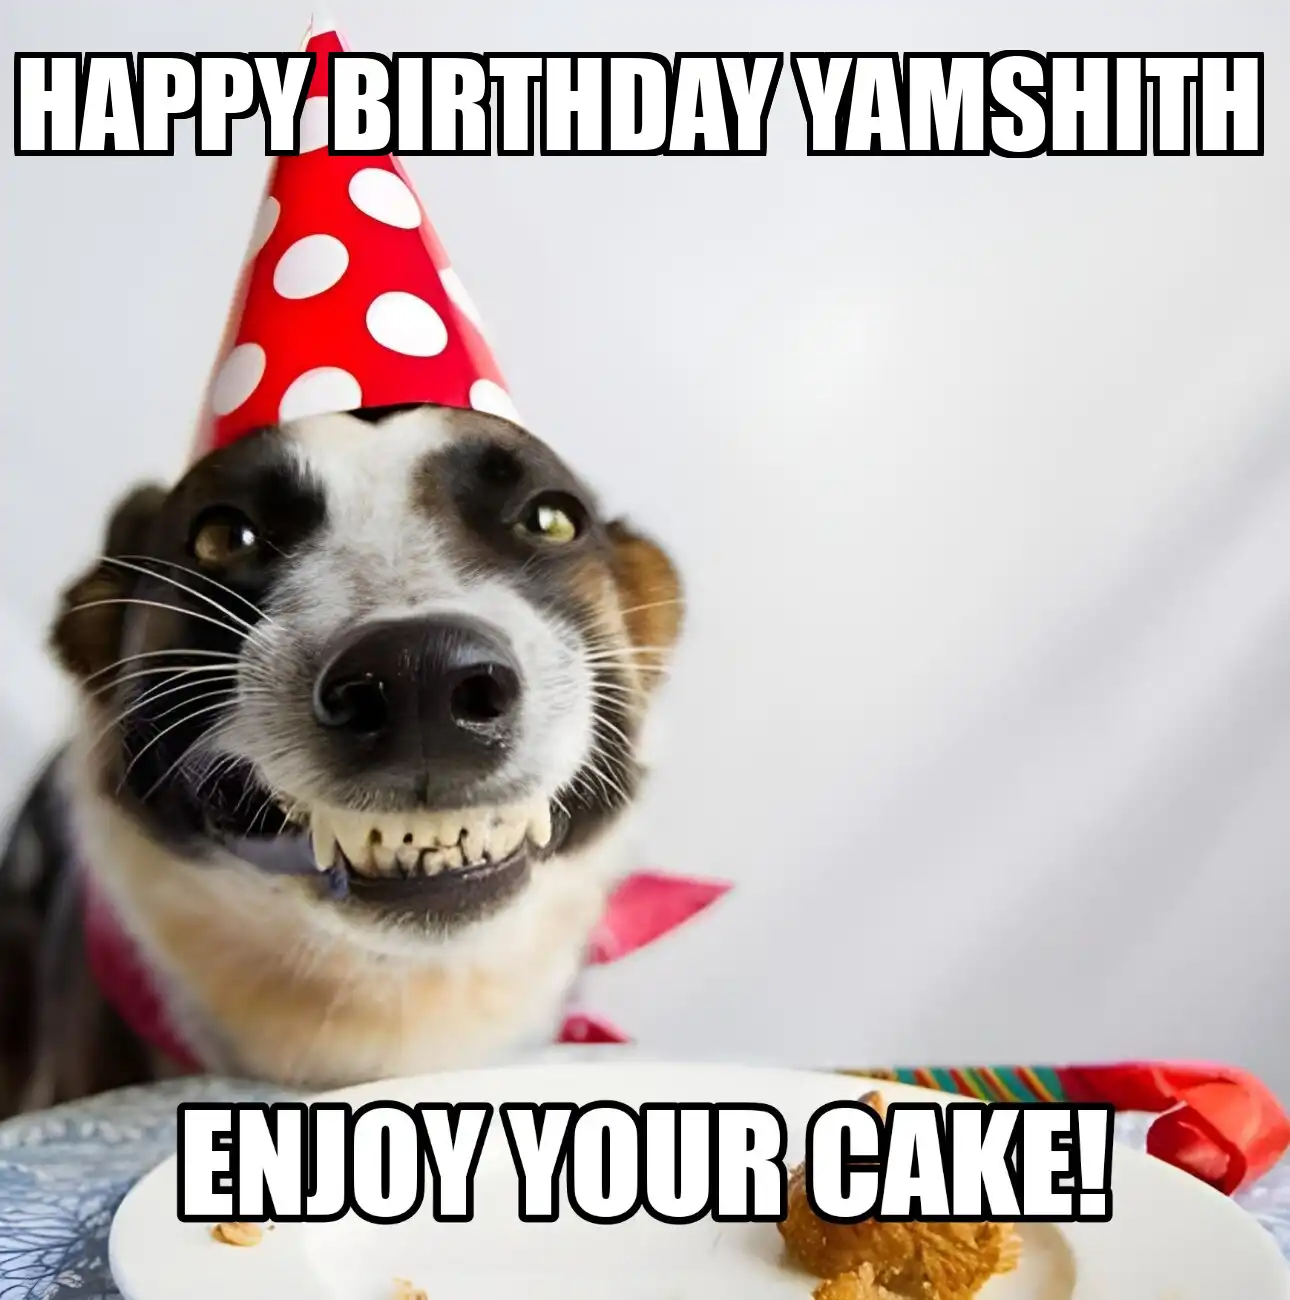 Happy Birthday Yamshith Enjoy Your Cake Dog Meme